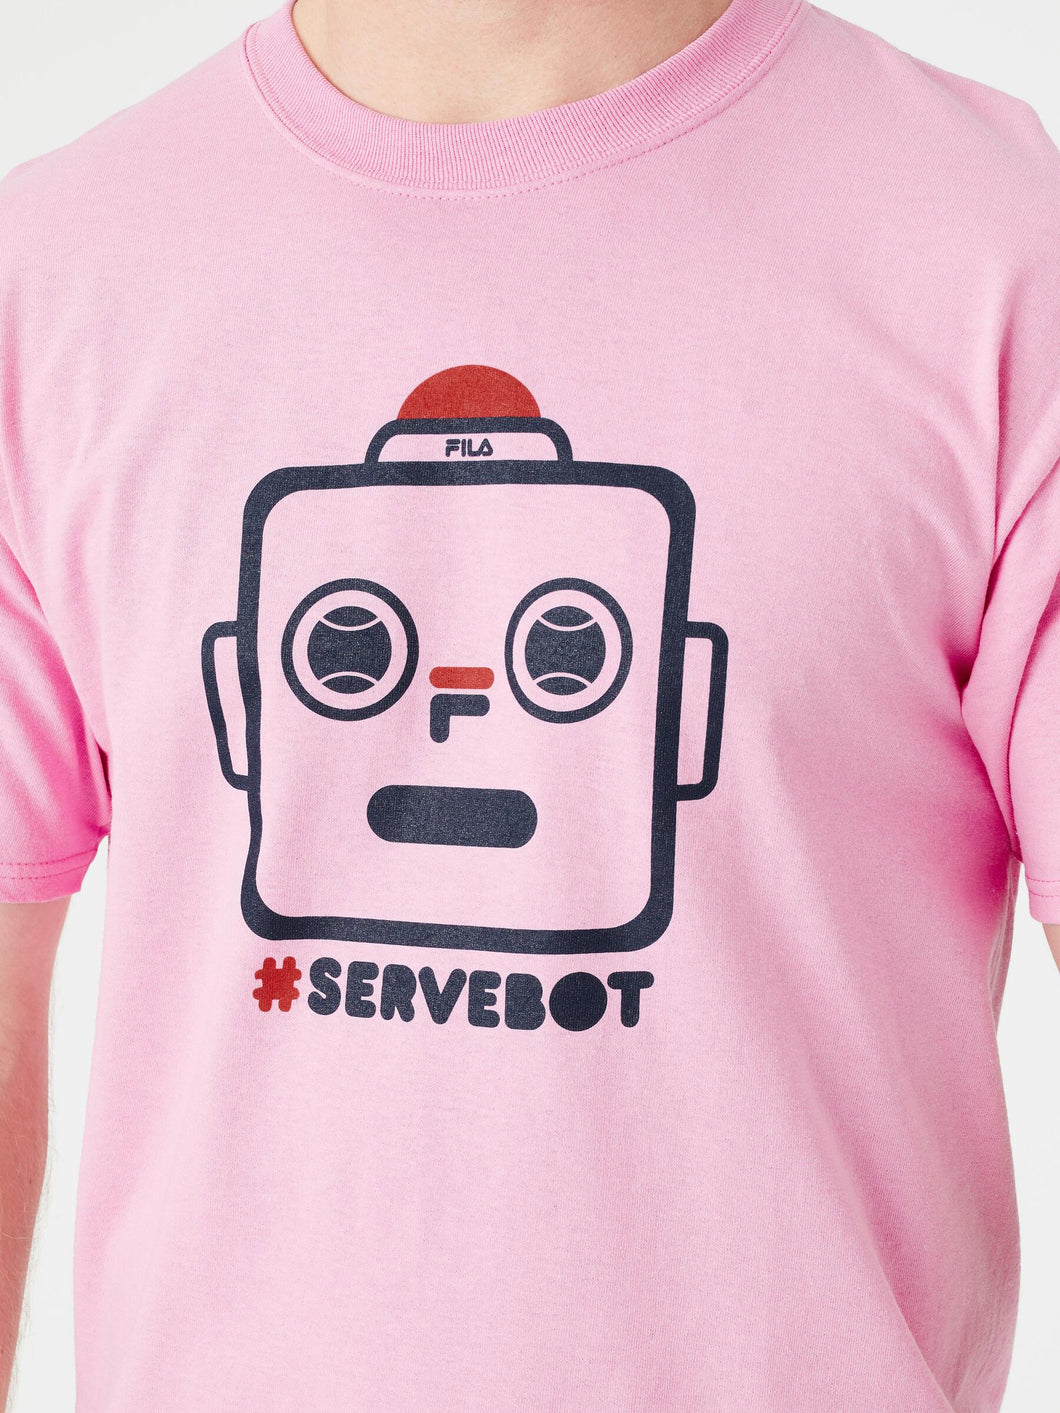 Fila Men's Serve Bot Tee- 897